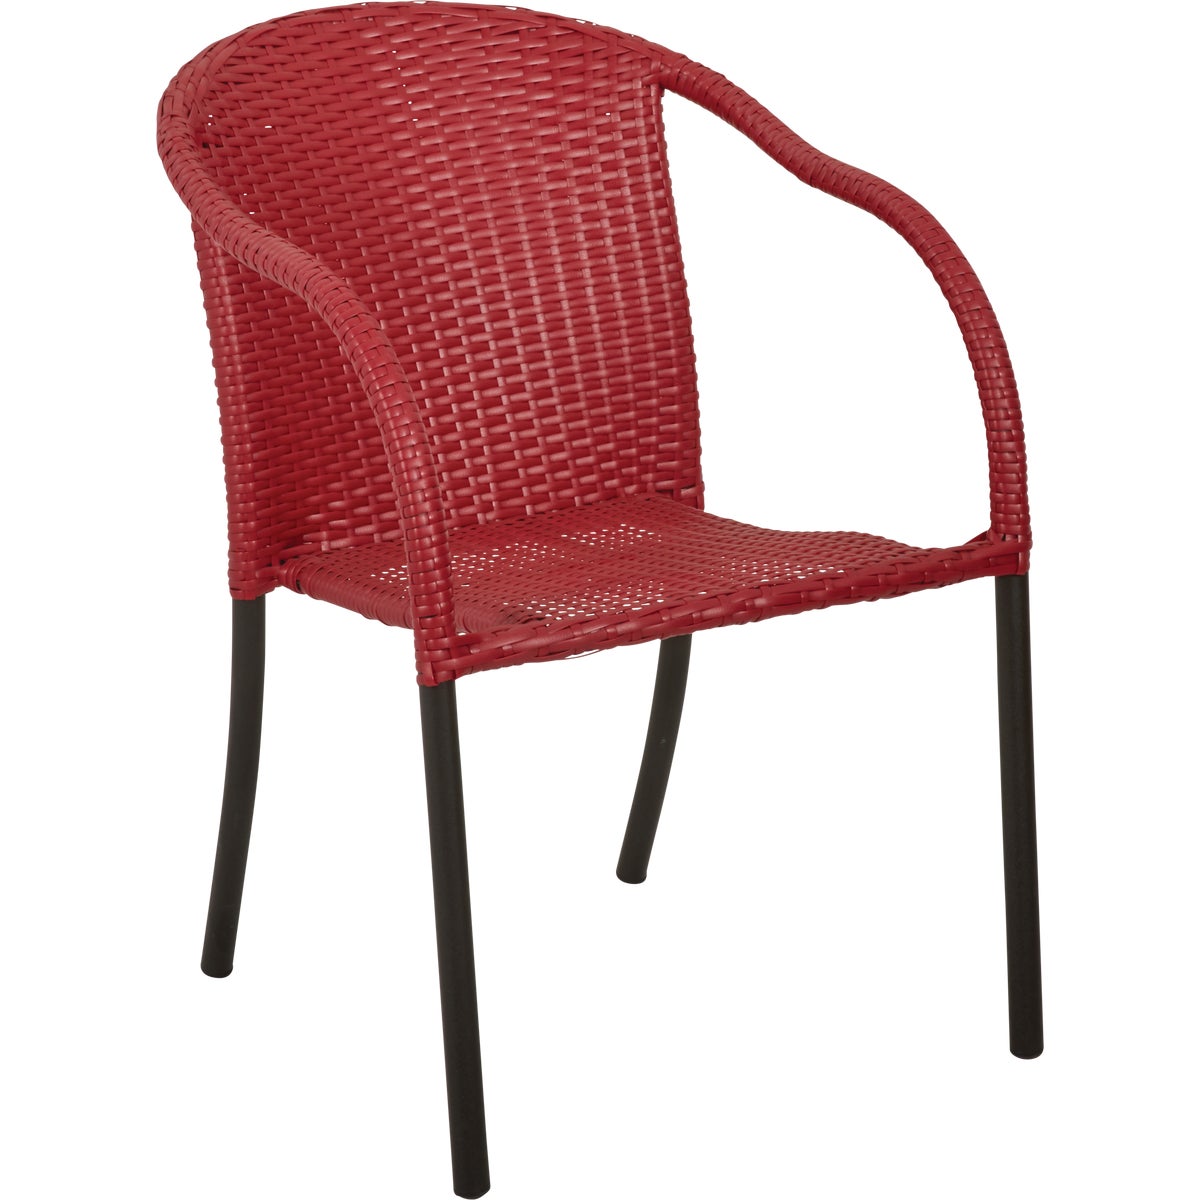 Coronado Casuals Red Wicker Steel Frame Stackable Chair